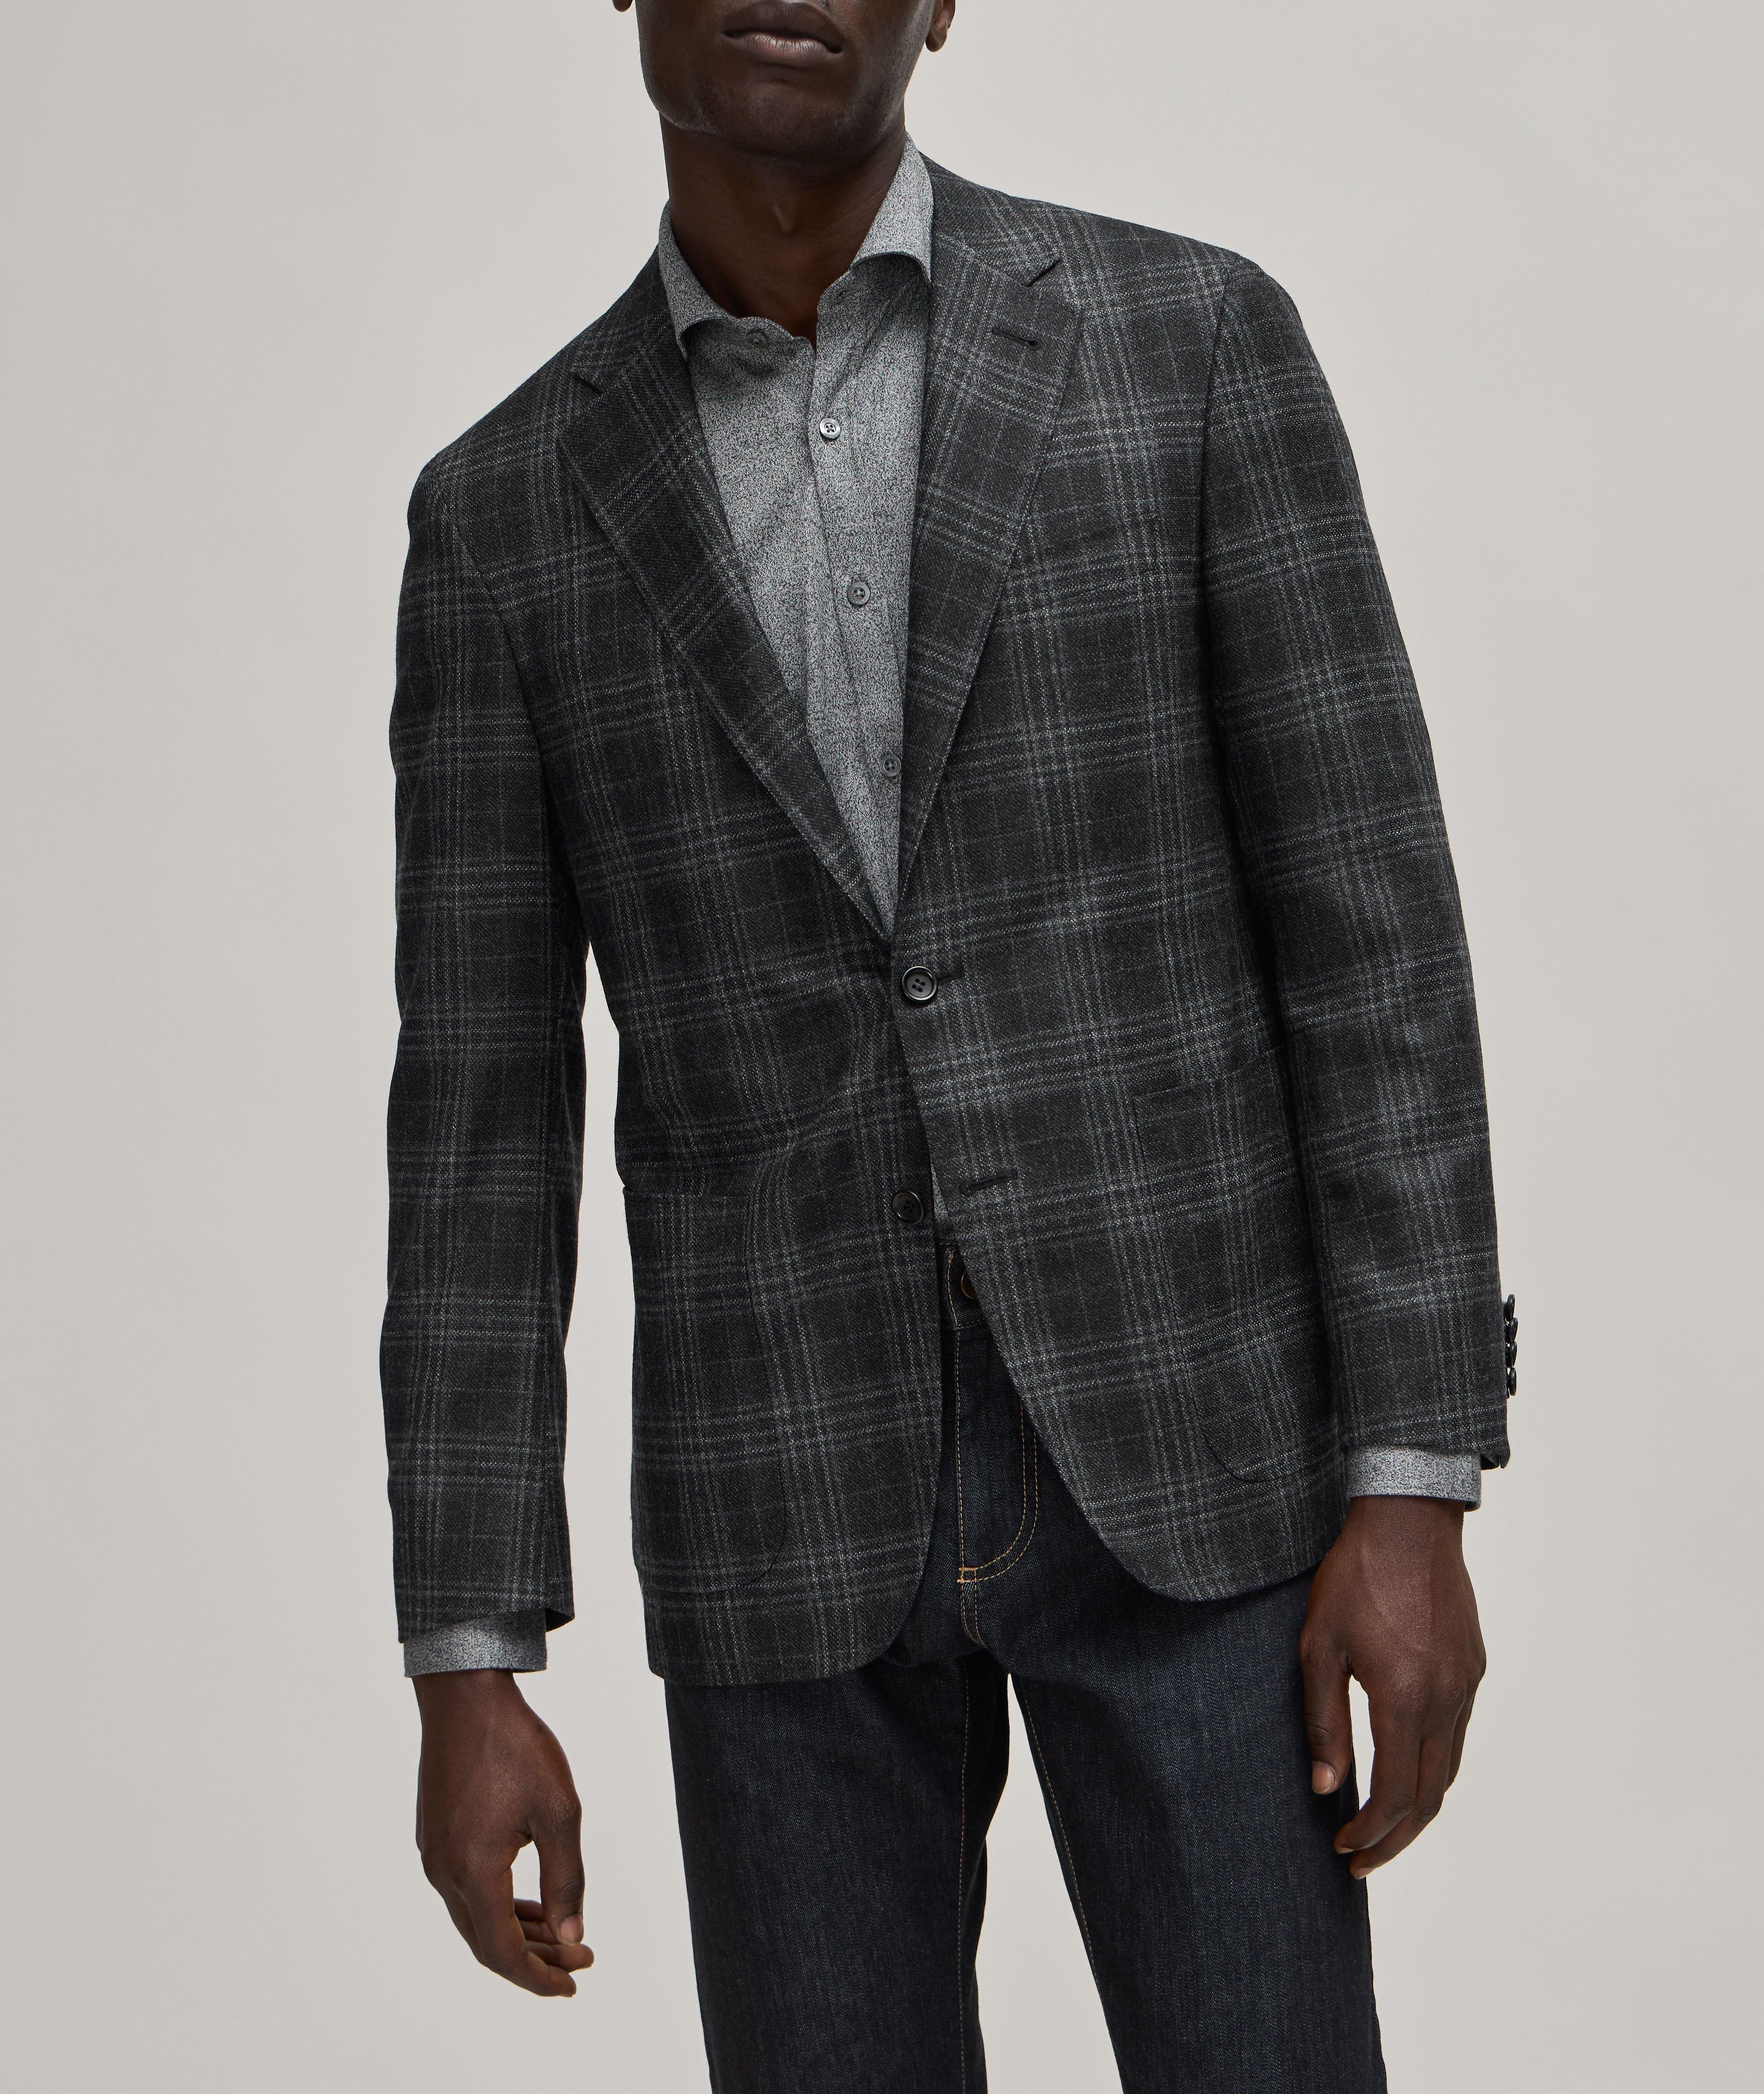 Kei Checkered Wool Sport Jacket image 1